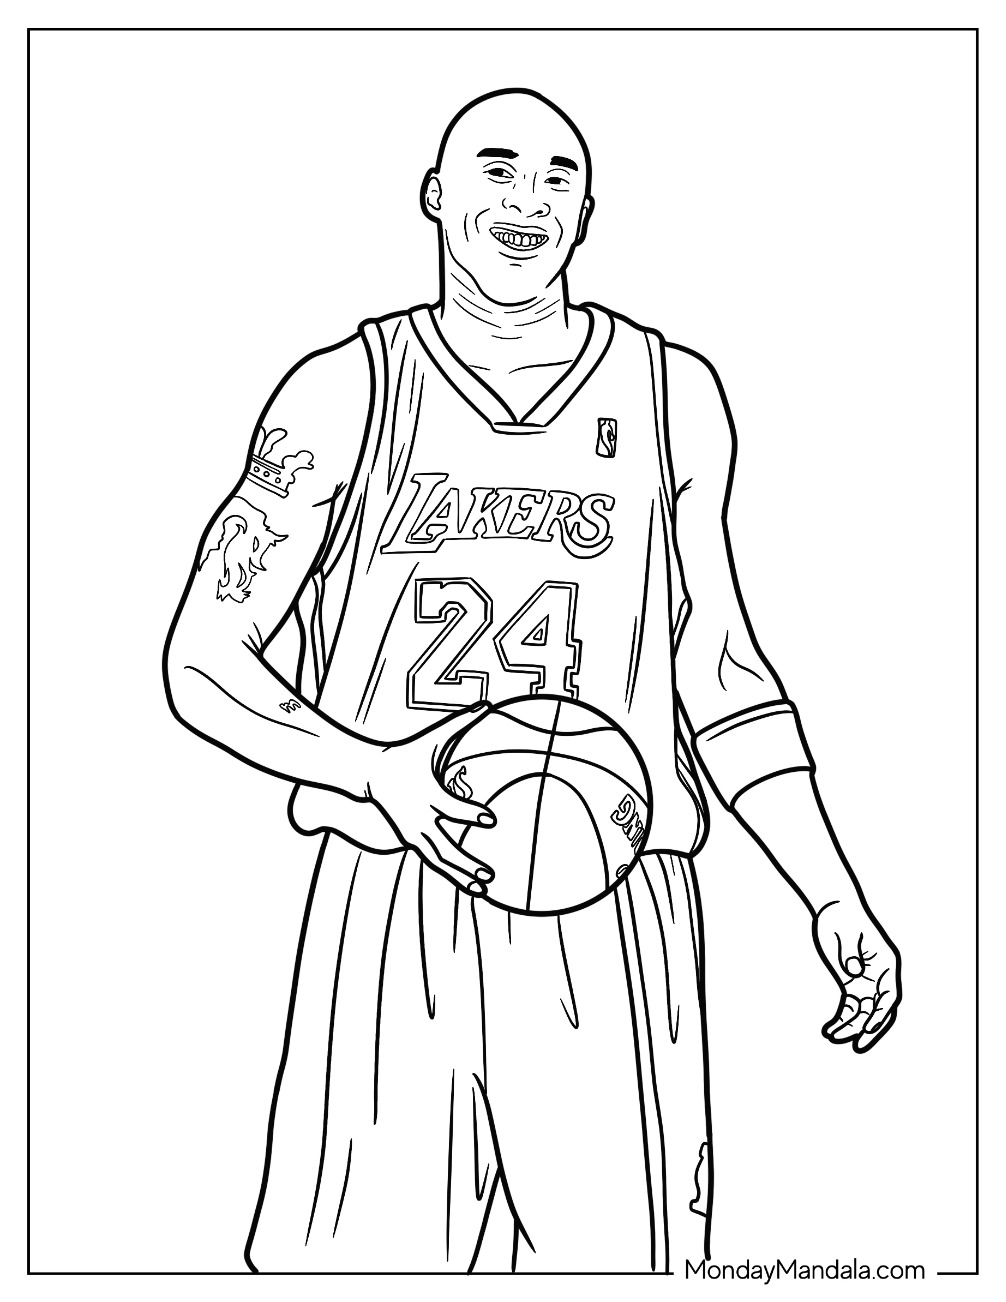 Kobe bryant coloring pages free pdf printables